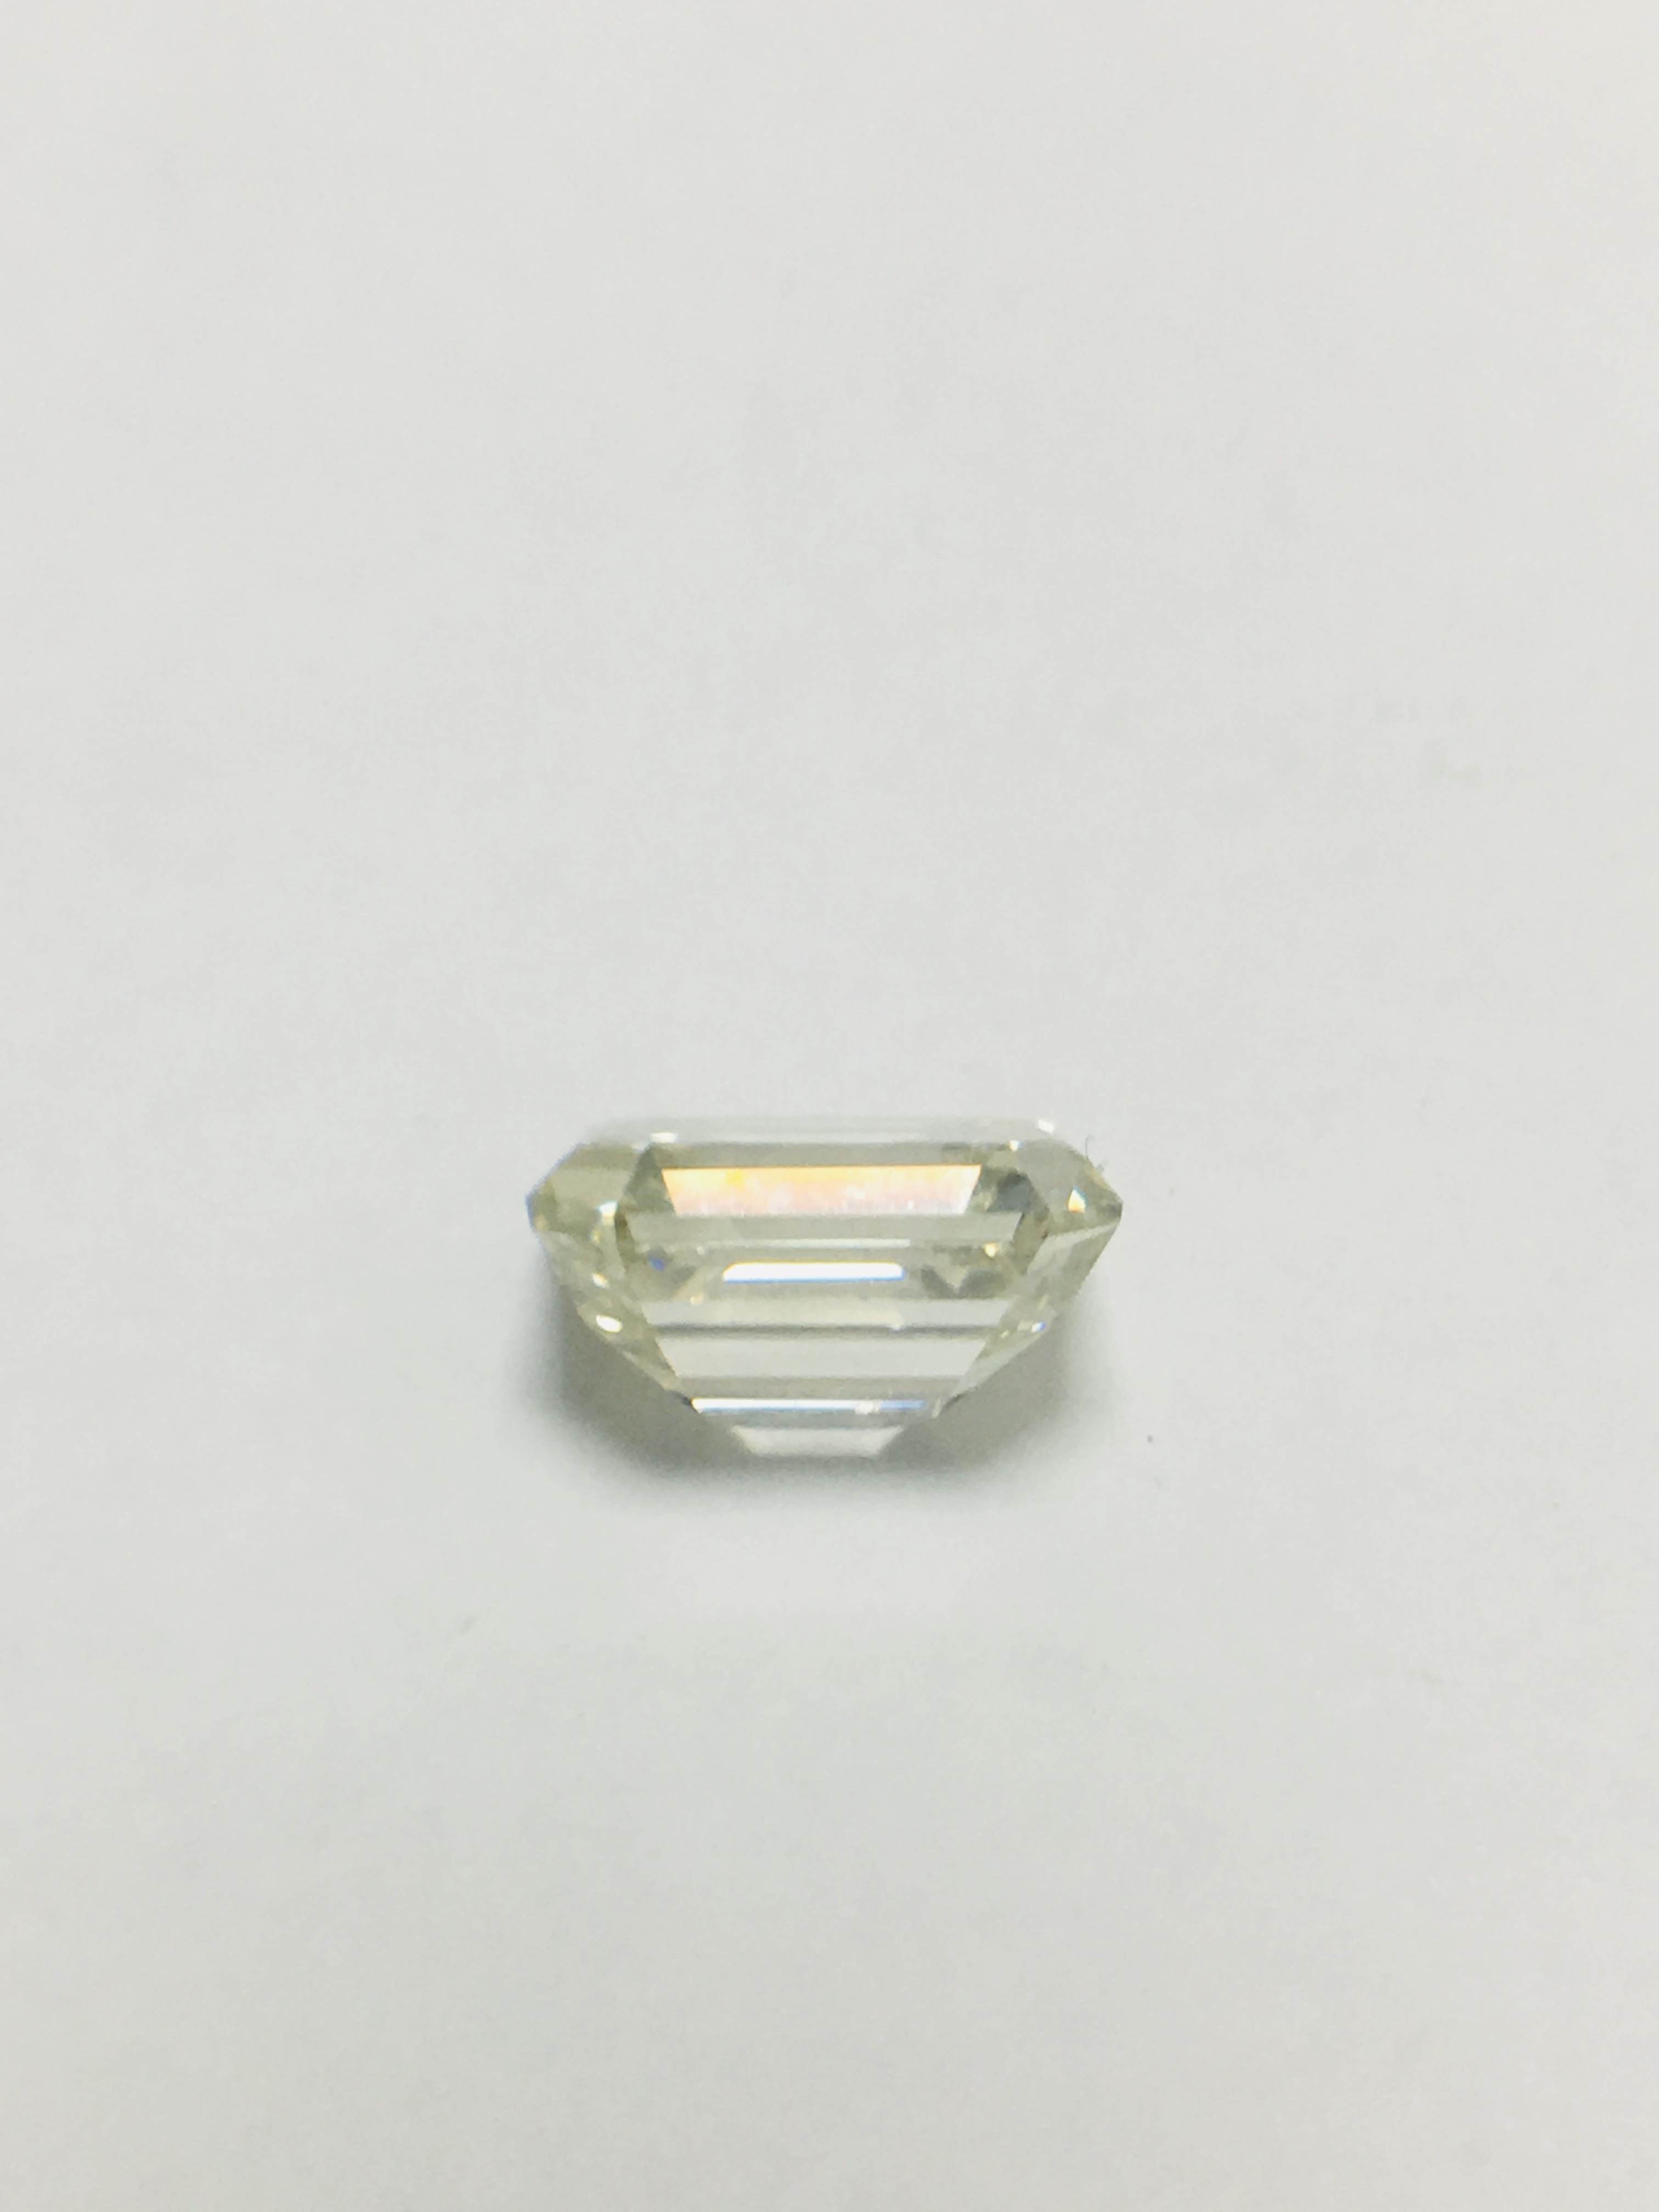 3.86ct Emerald Cut Diamond,Vs2 clarity,K colour,EGL CertificationEGL1516734222 - Image 3 of 5